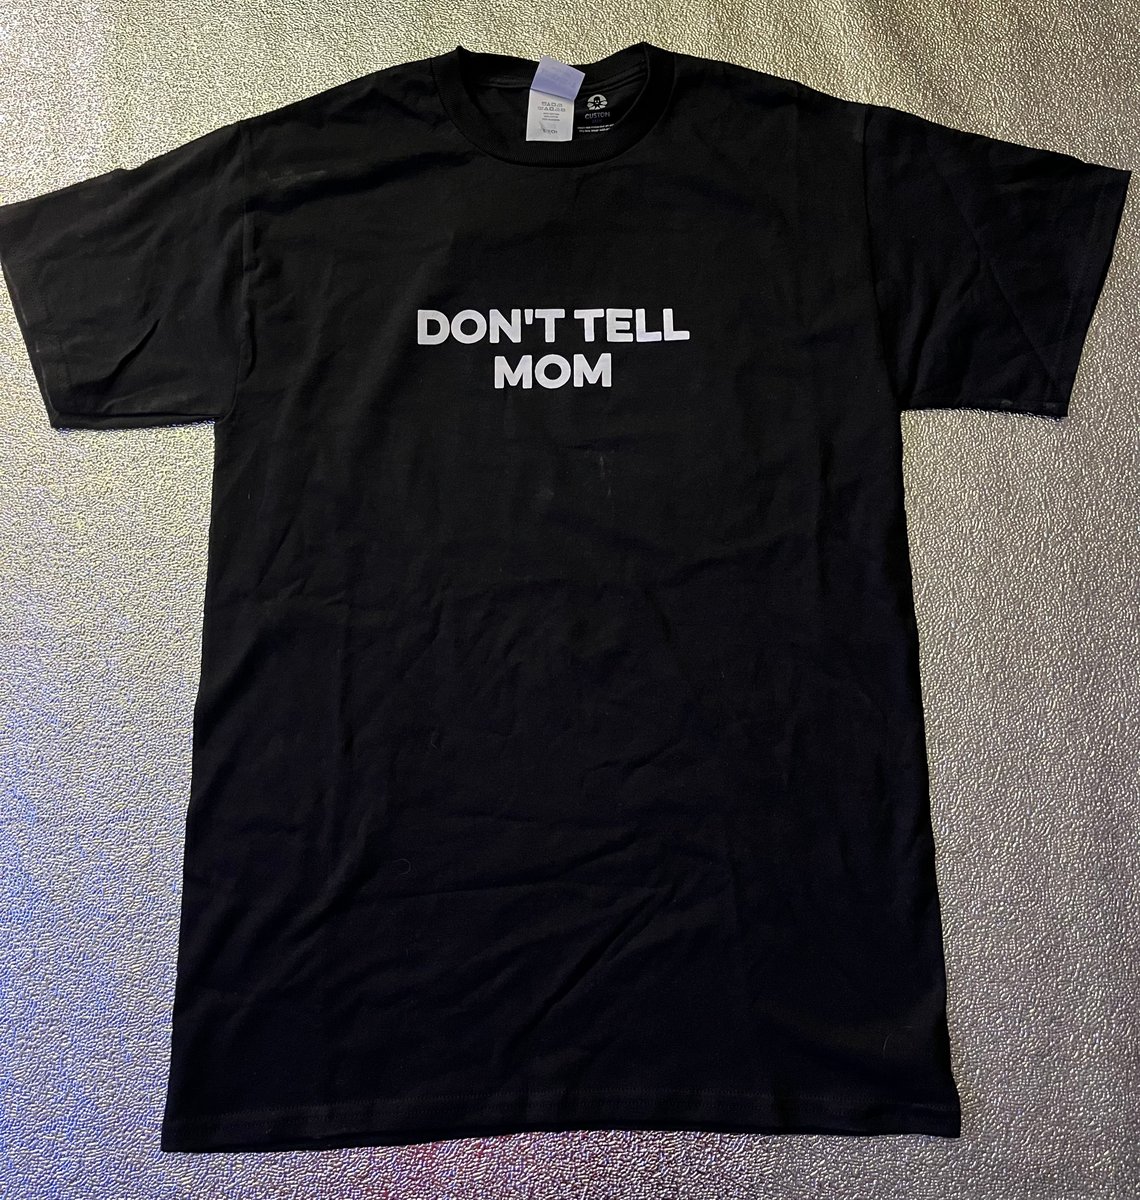 Keith Coogan — “Don’t Tell Mom” T-Shirt